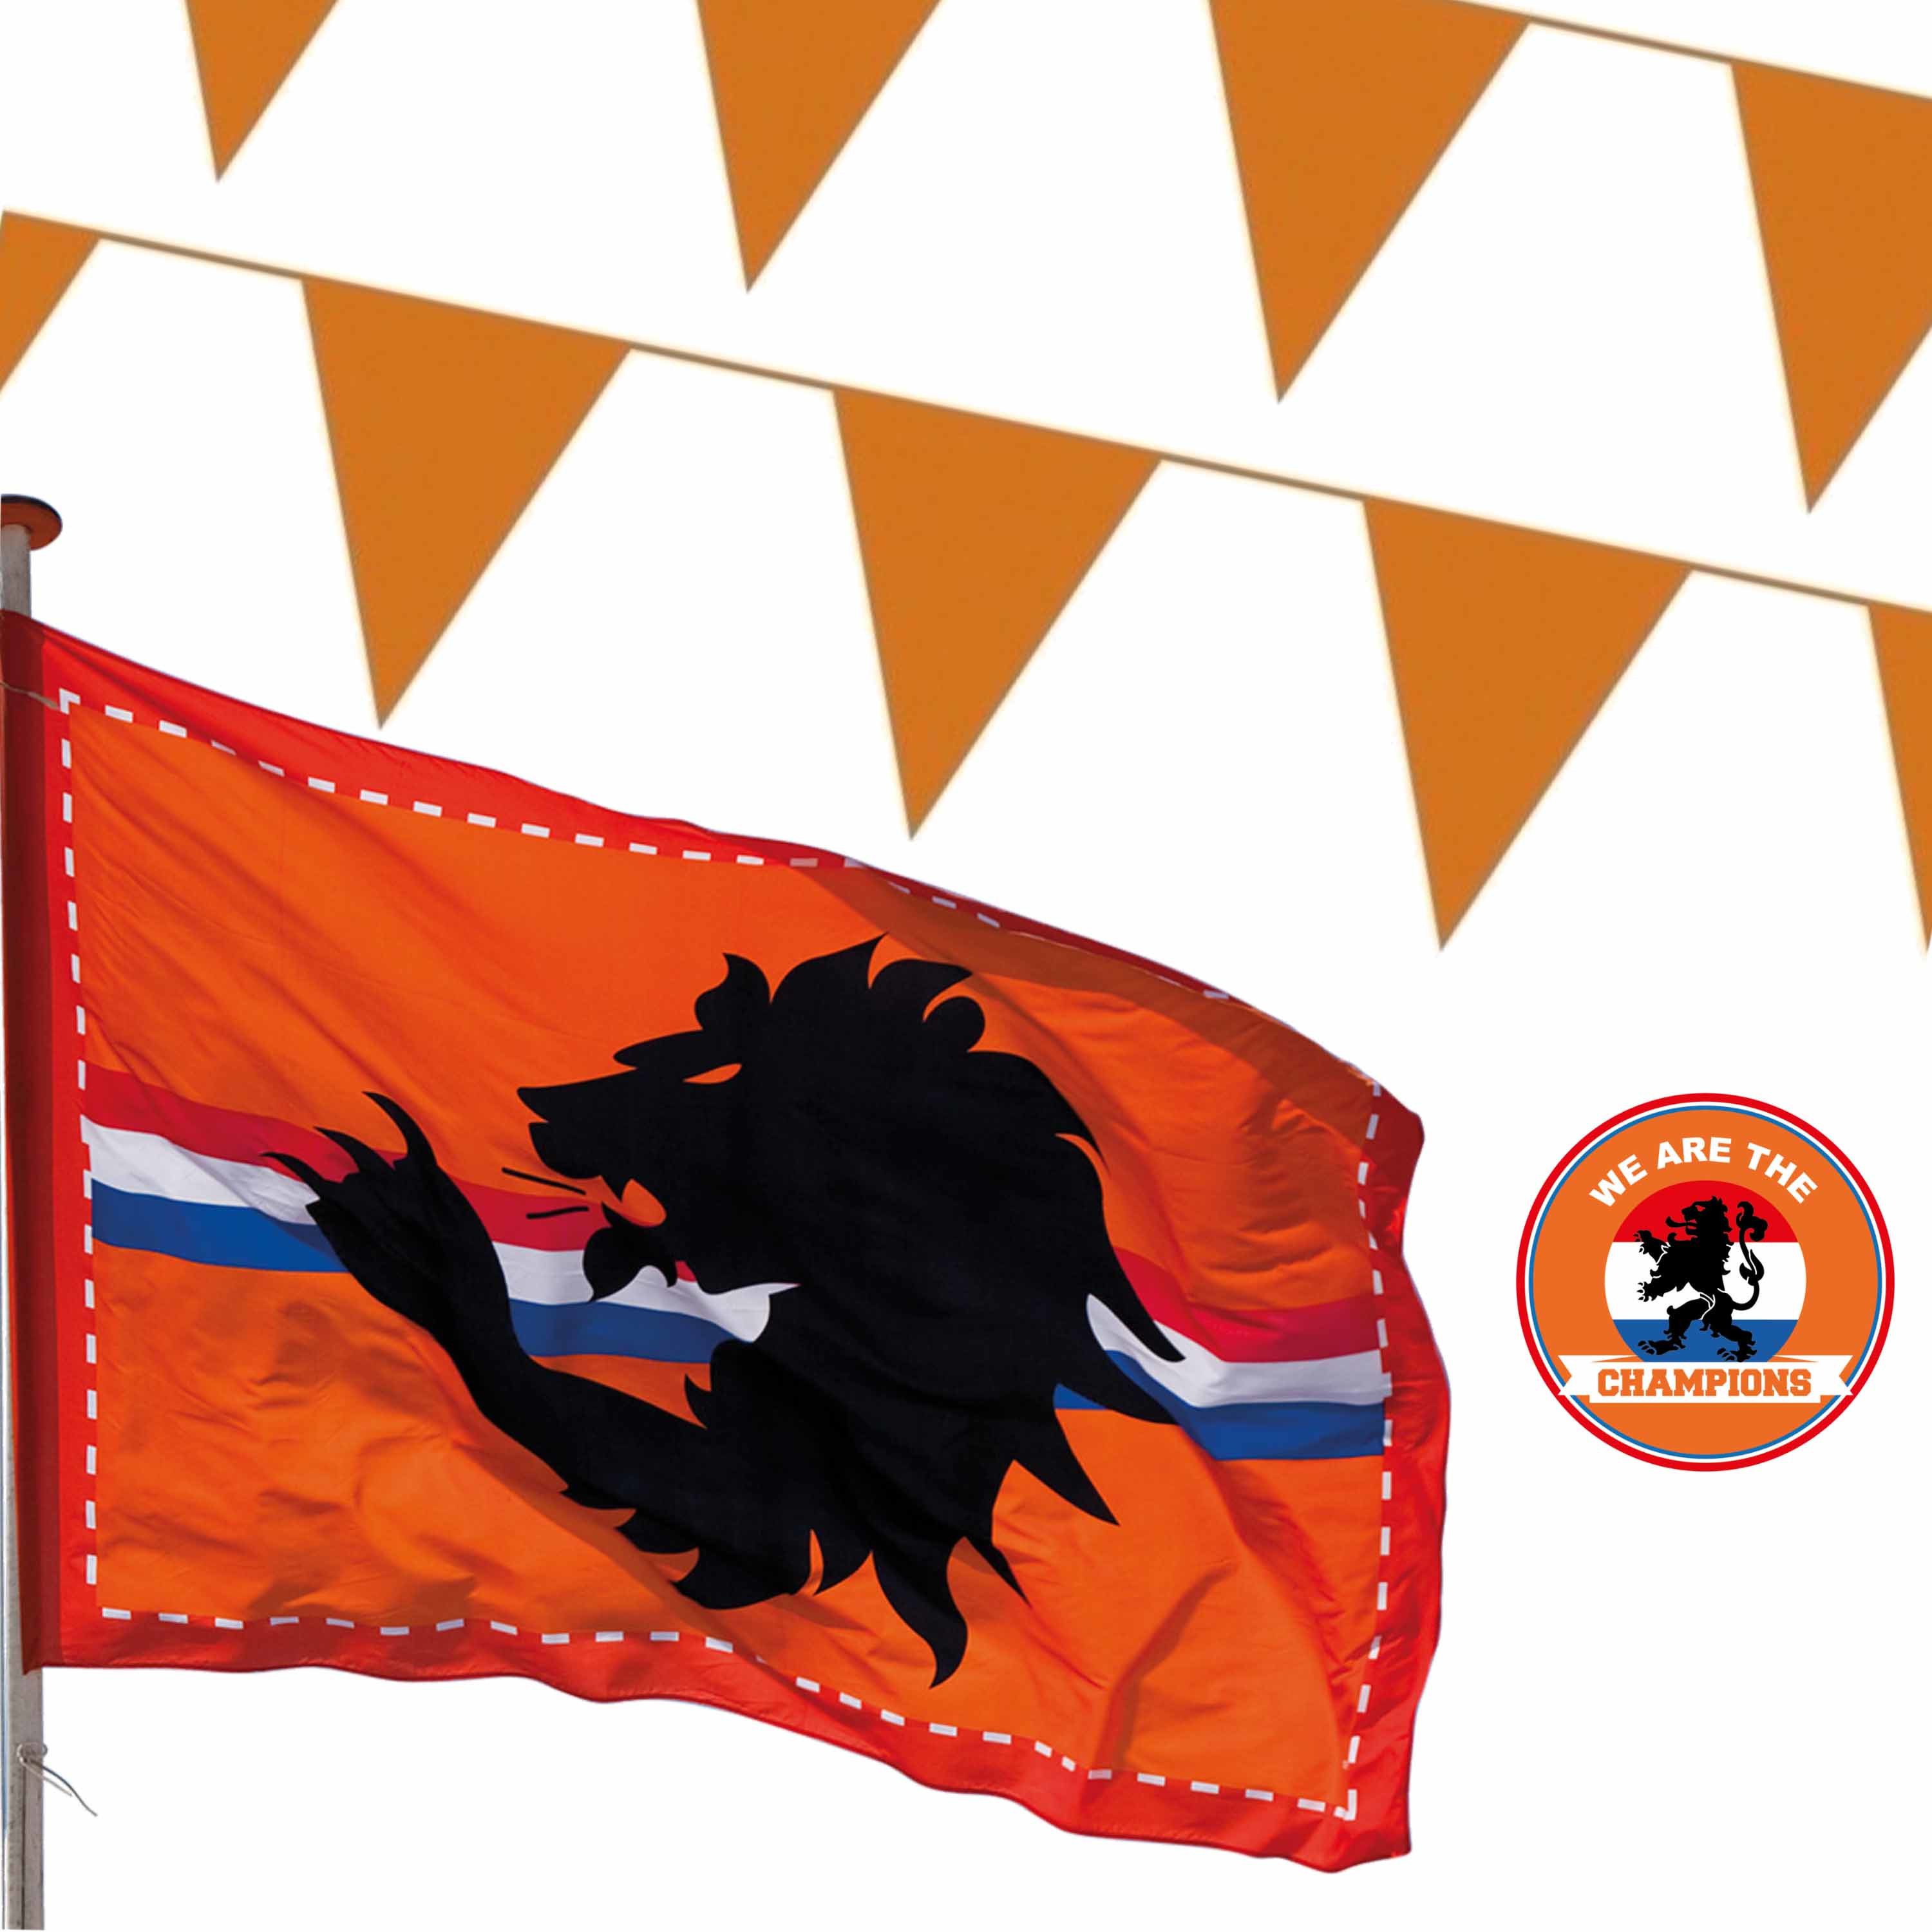 Ek oranje straat huis versiering pakket met oa 1x Mega Holland vlag, 300 meter oranje vlaggenlijnen